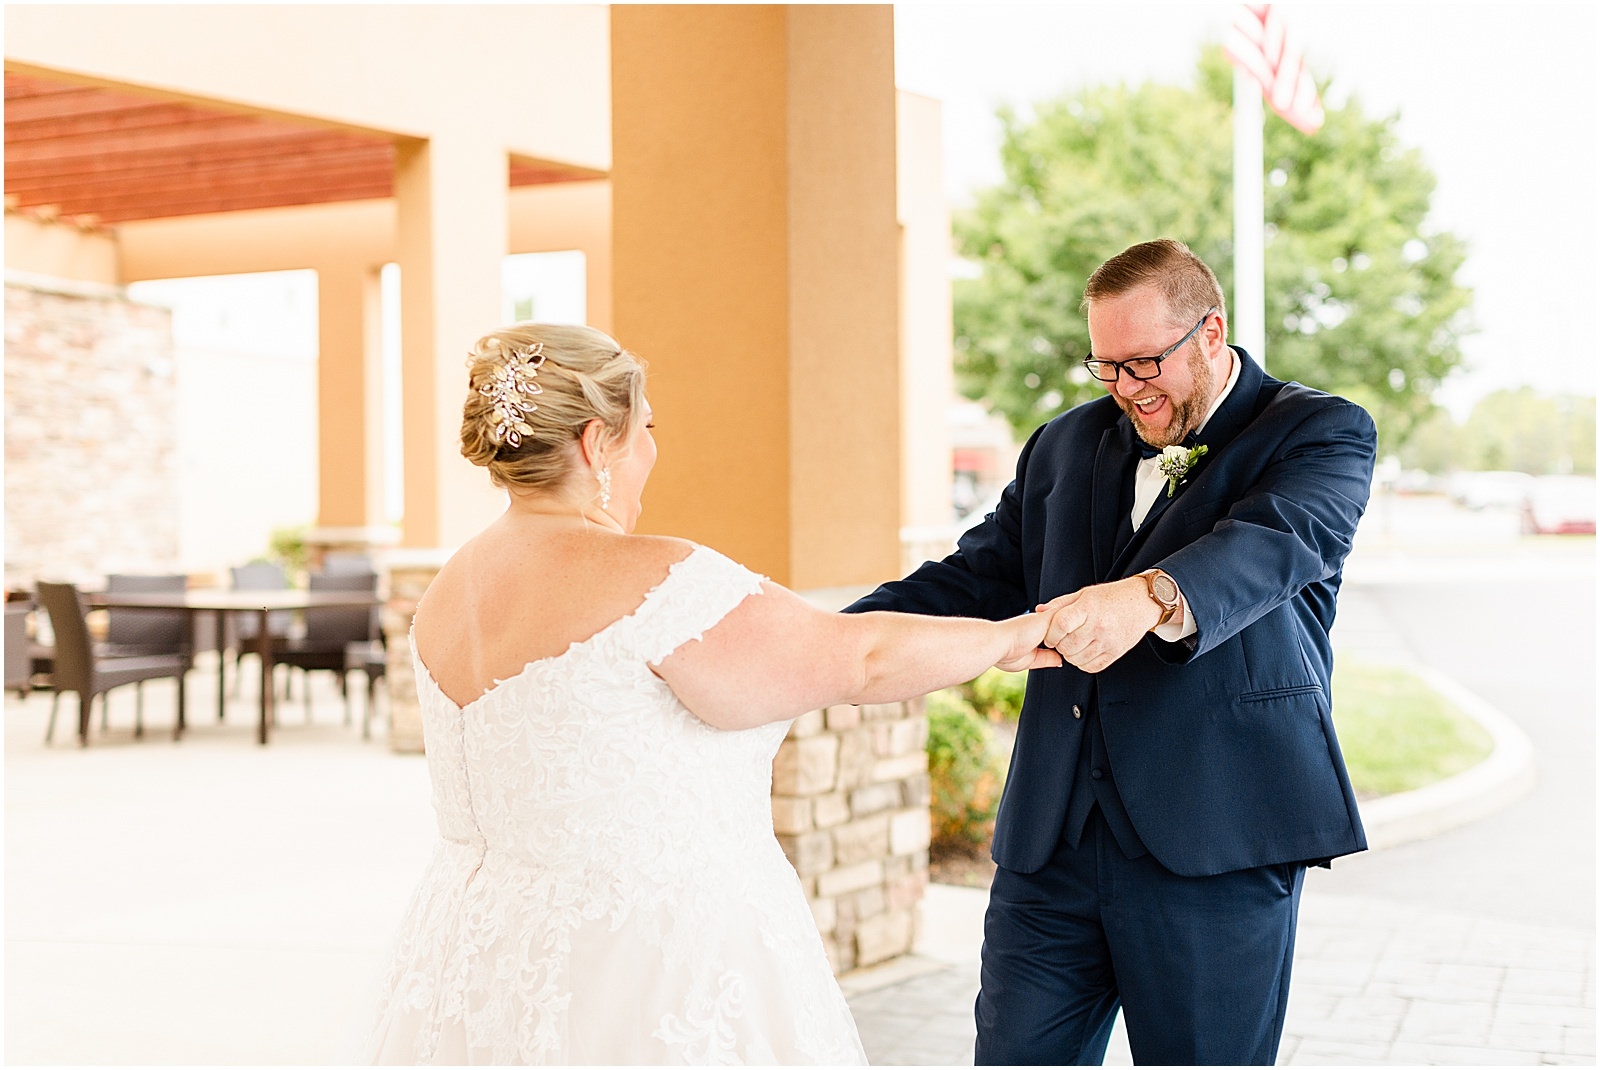 Brittany and Neil's Wedding at Neu Chapel Bret and Brandie | Evansville Photographers | @bretandbrandie-0040.jpg